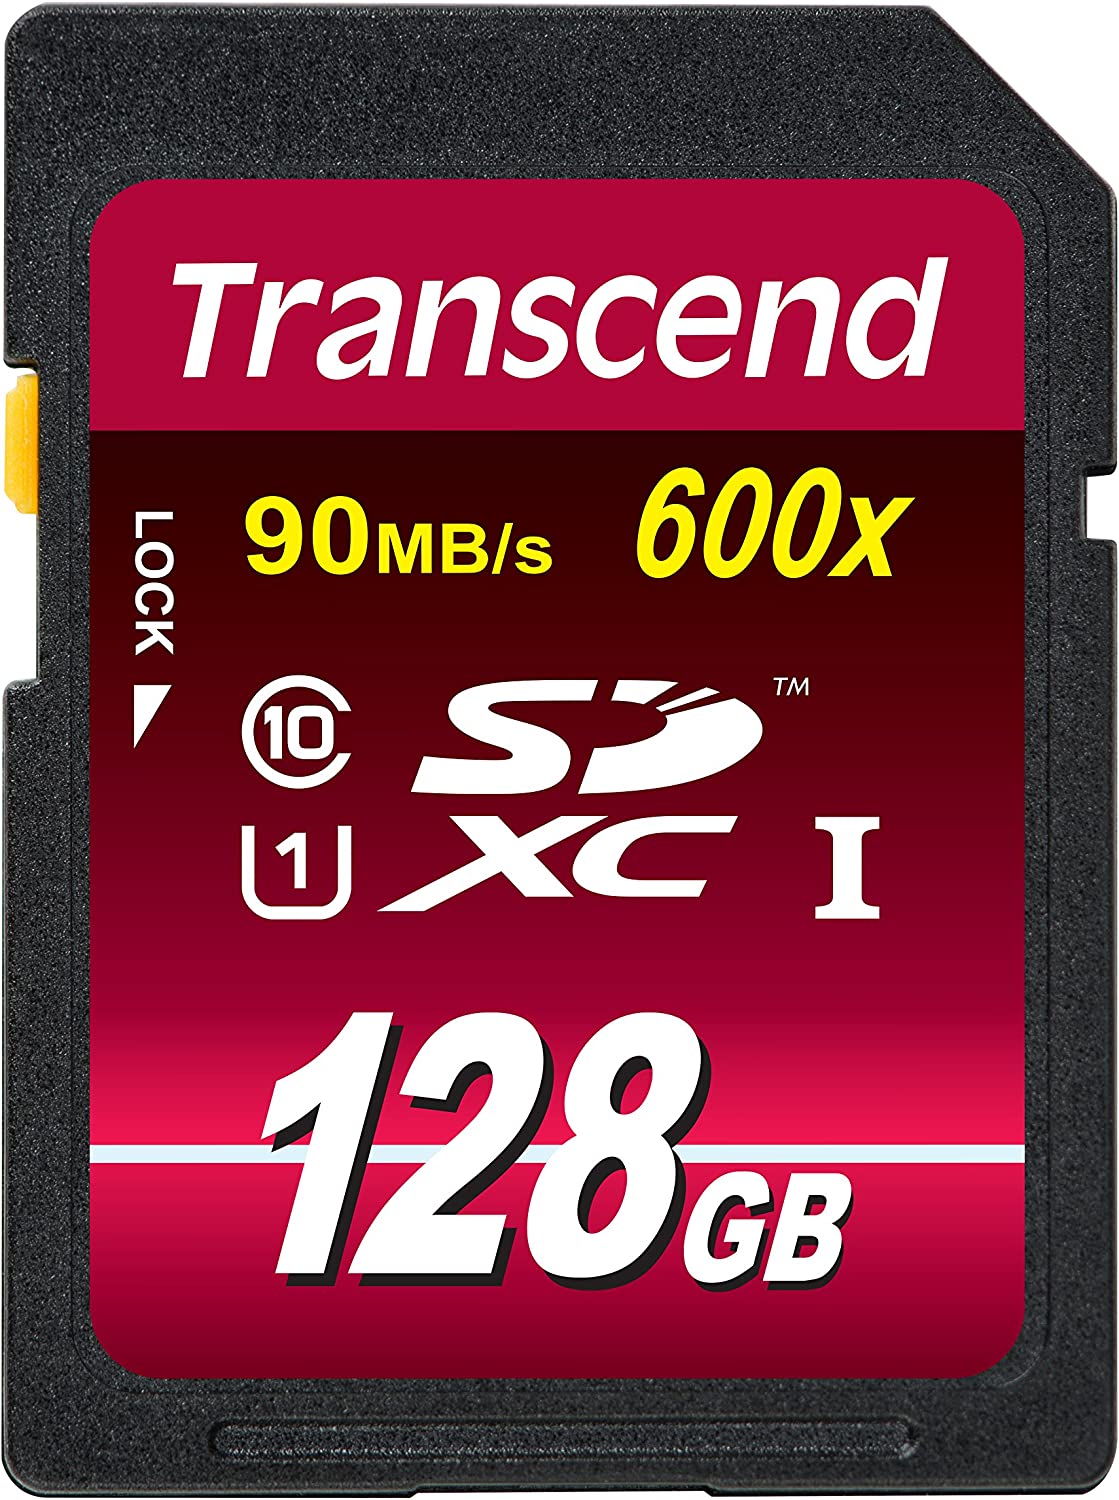 Transcend 128GB SDXC Class 10 UHS-1 Flash Memory Card Up to 90MB/s (TS128GSDXC10U1) 128 GB Standard Packaging